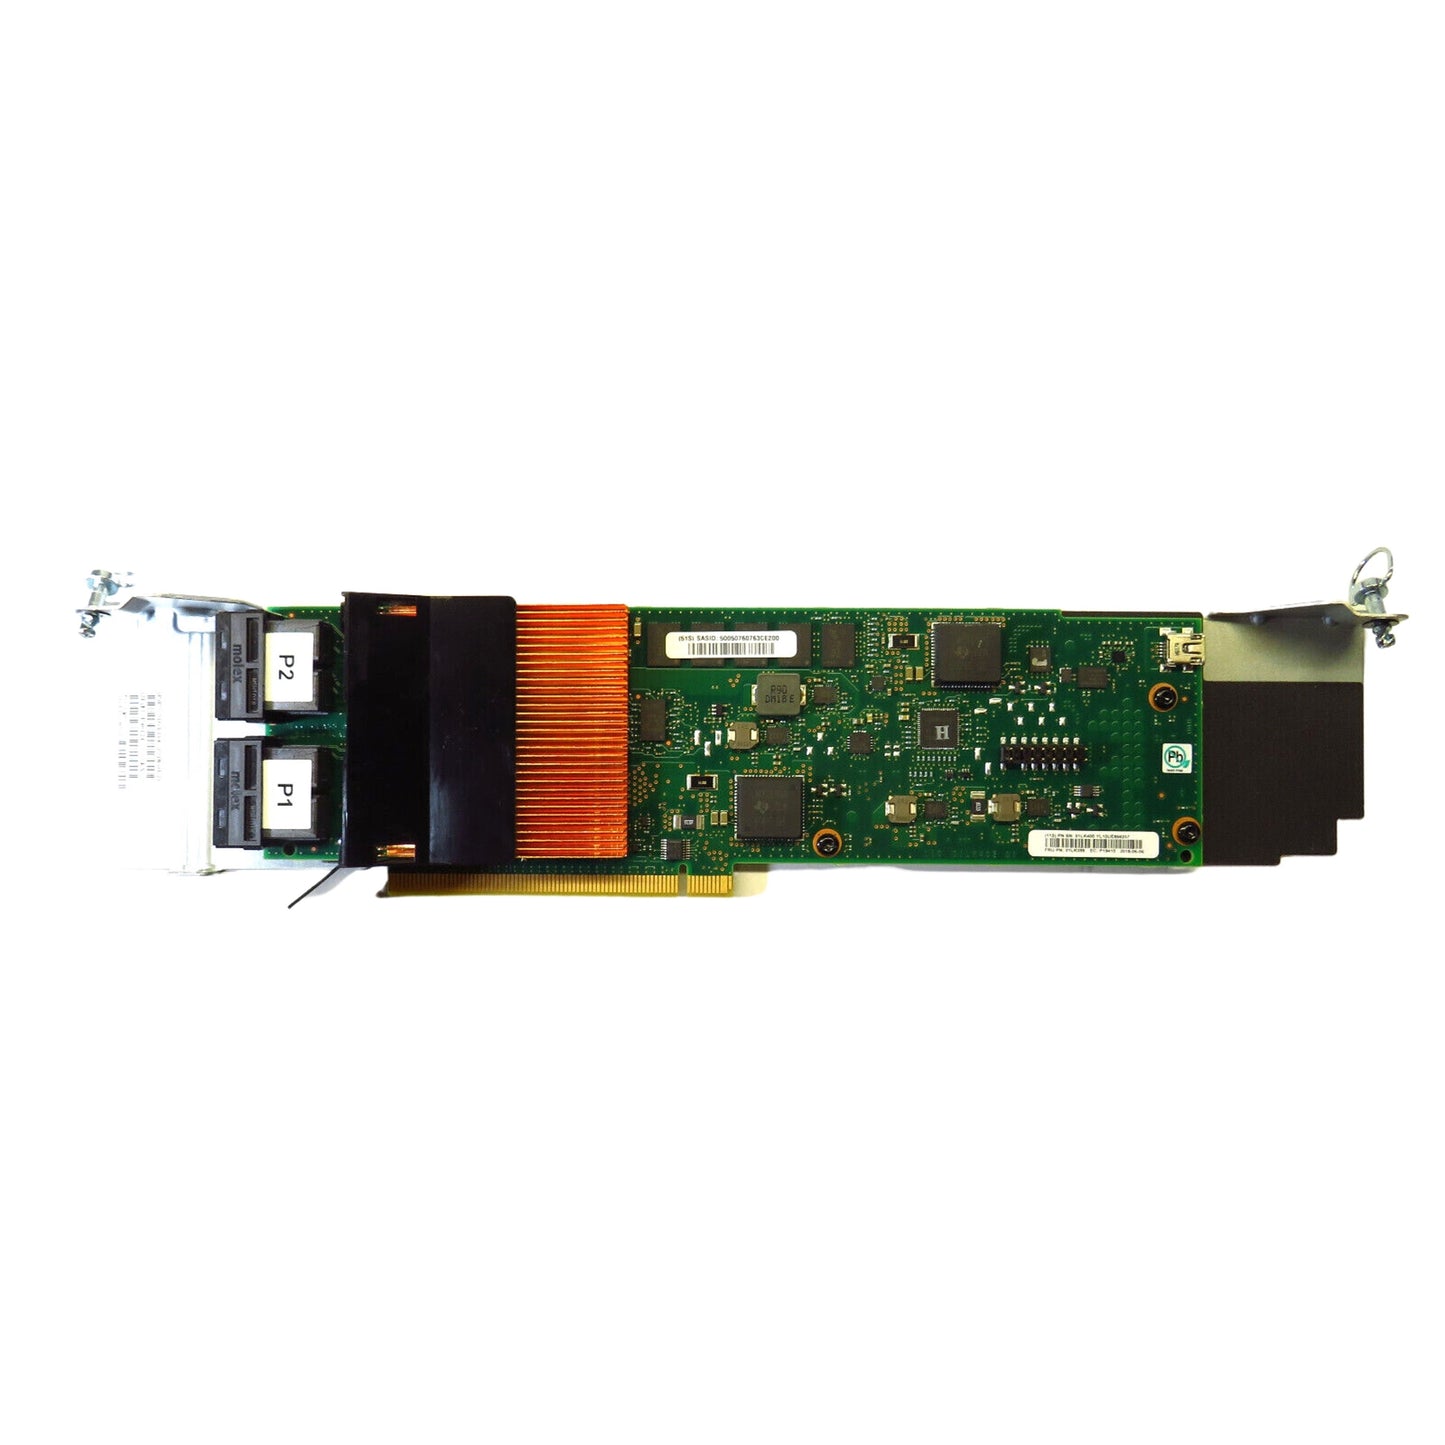 IBM 01LK399 57D7 6Gbps SAS RAID Adapter Card (Refurbished)